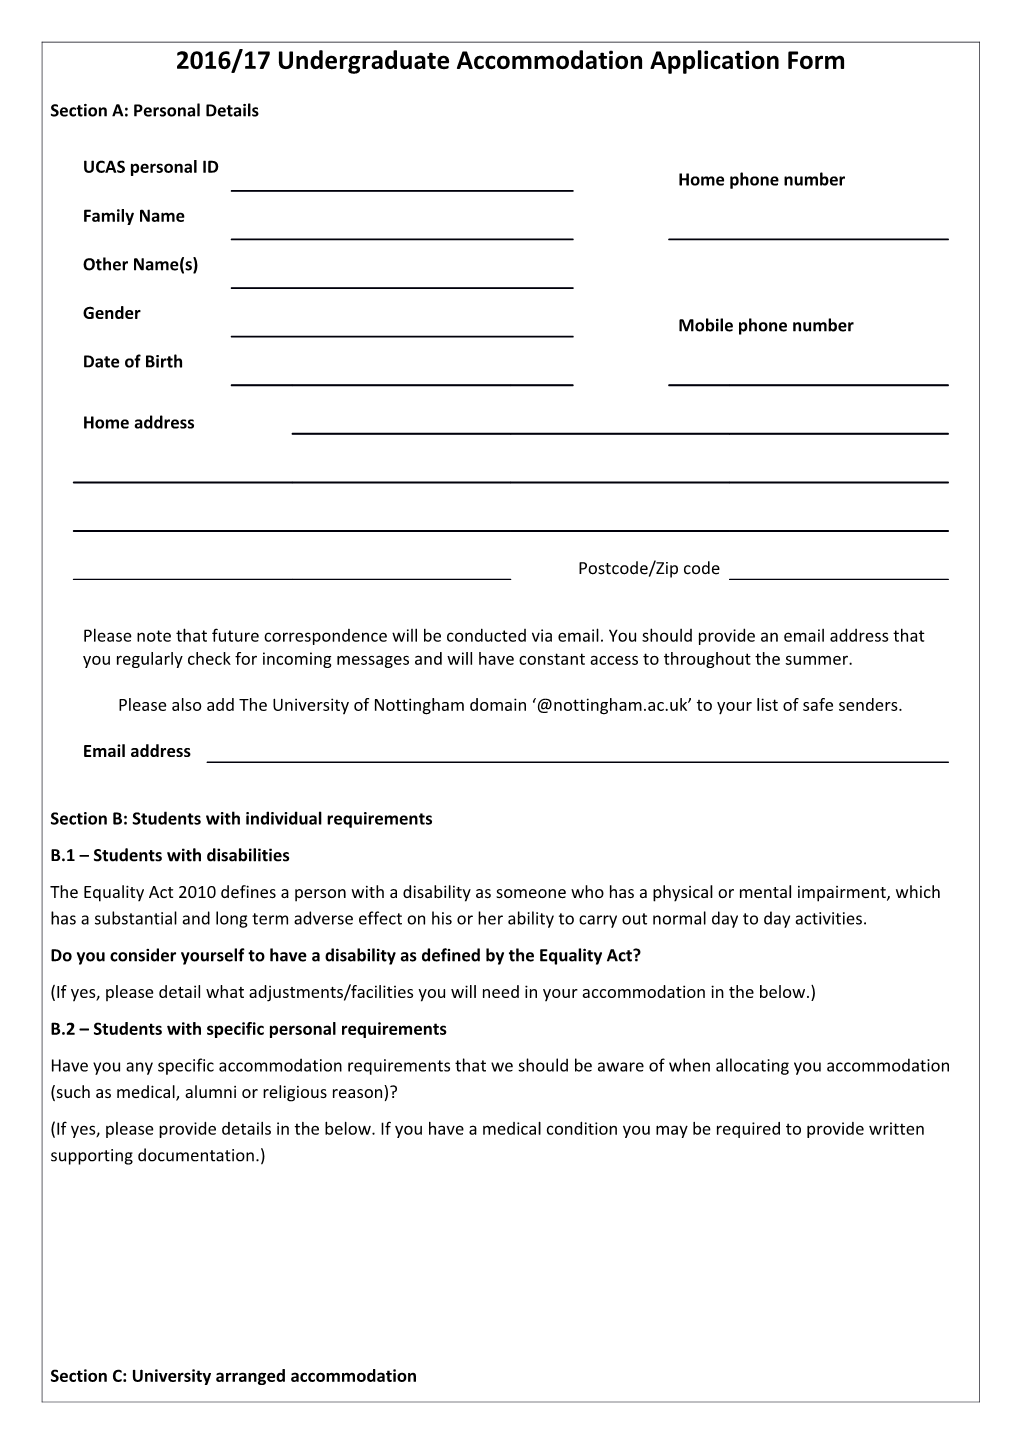 2016/17 Undergraduate Accommodation Application Form